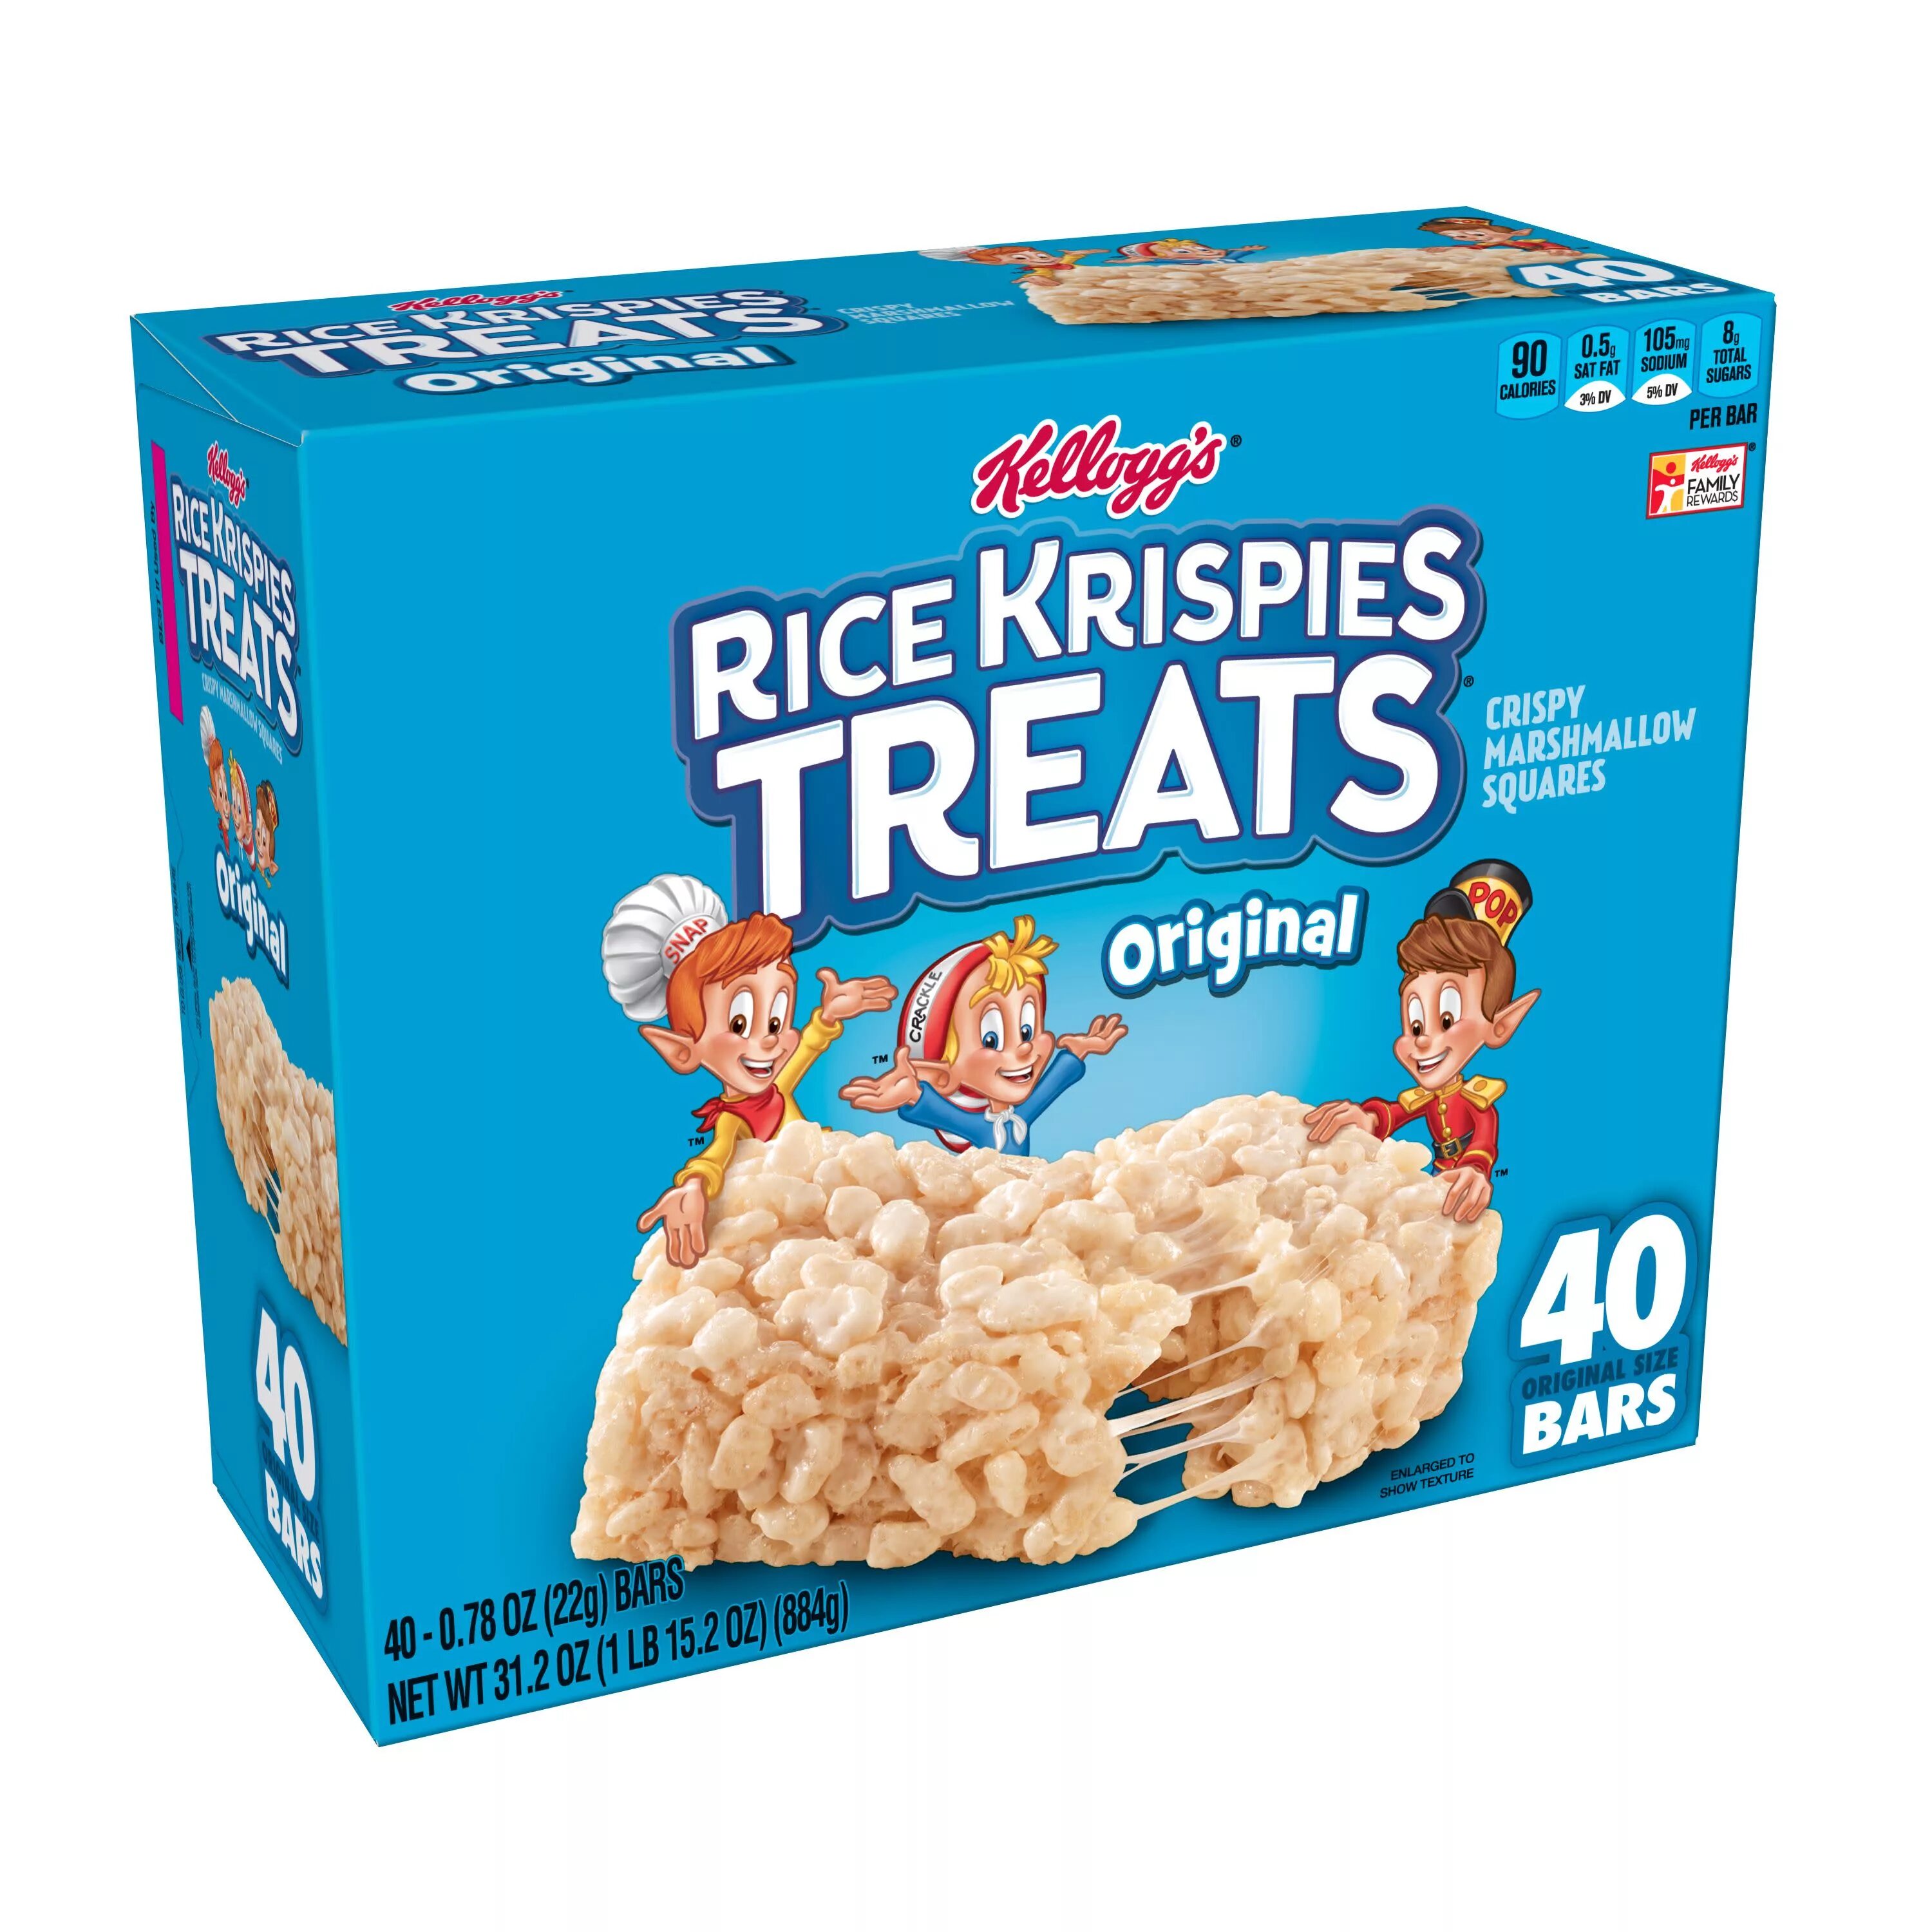 Райс криспис. Kellogg Rice Krispies. Rice Crispy Kelloggs. Rice Krispies treats. Шарики криспи